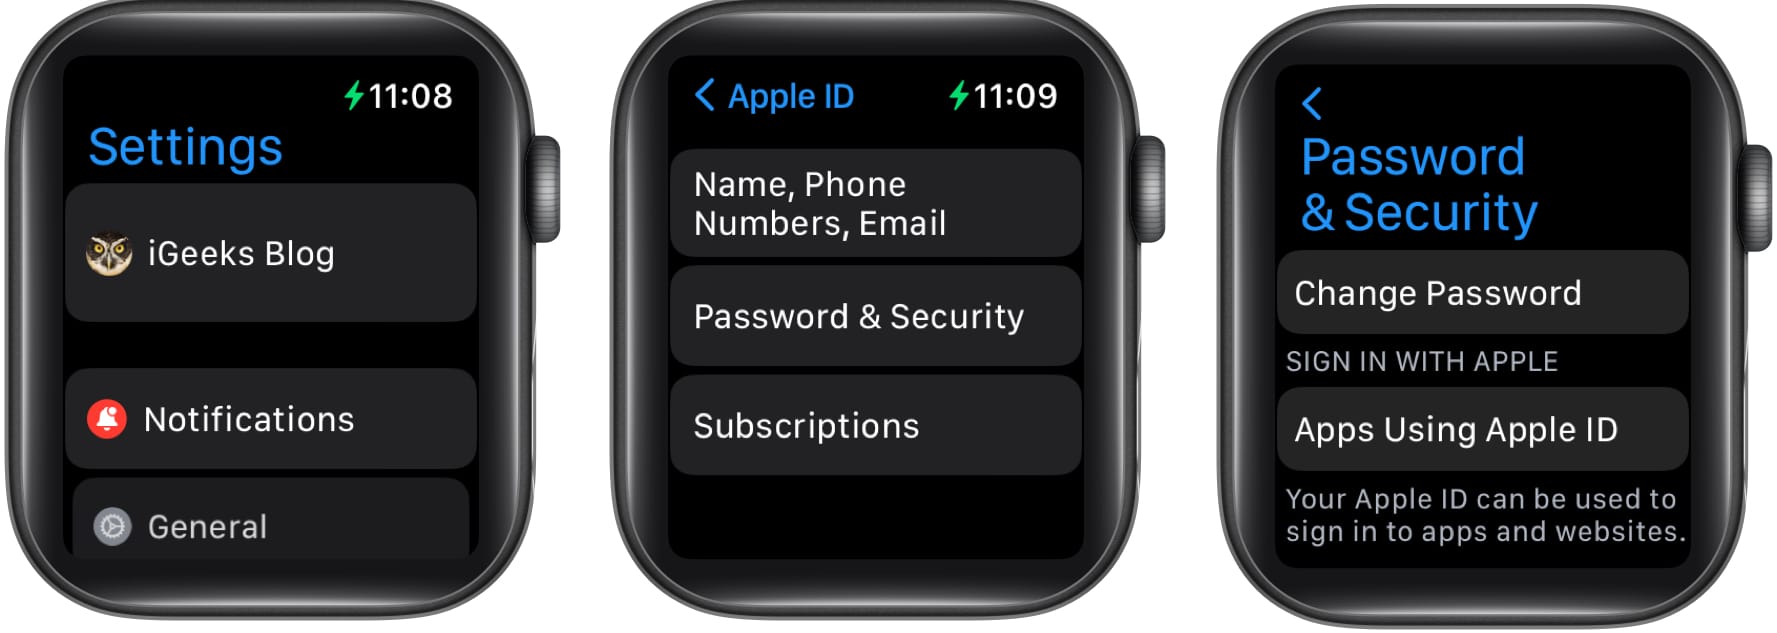 Select Change Password on Apple Watch